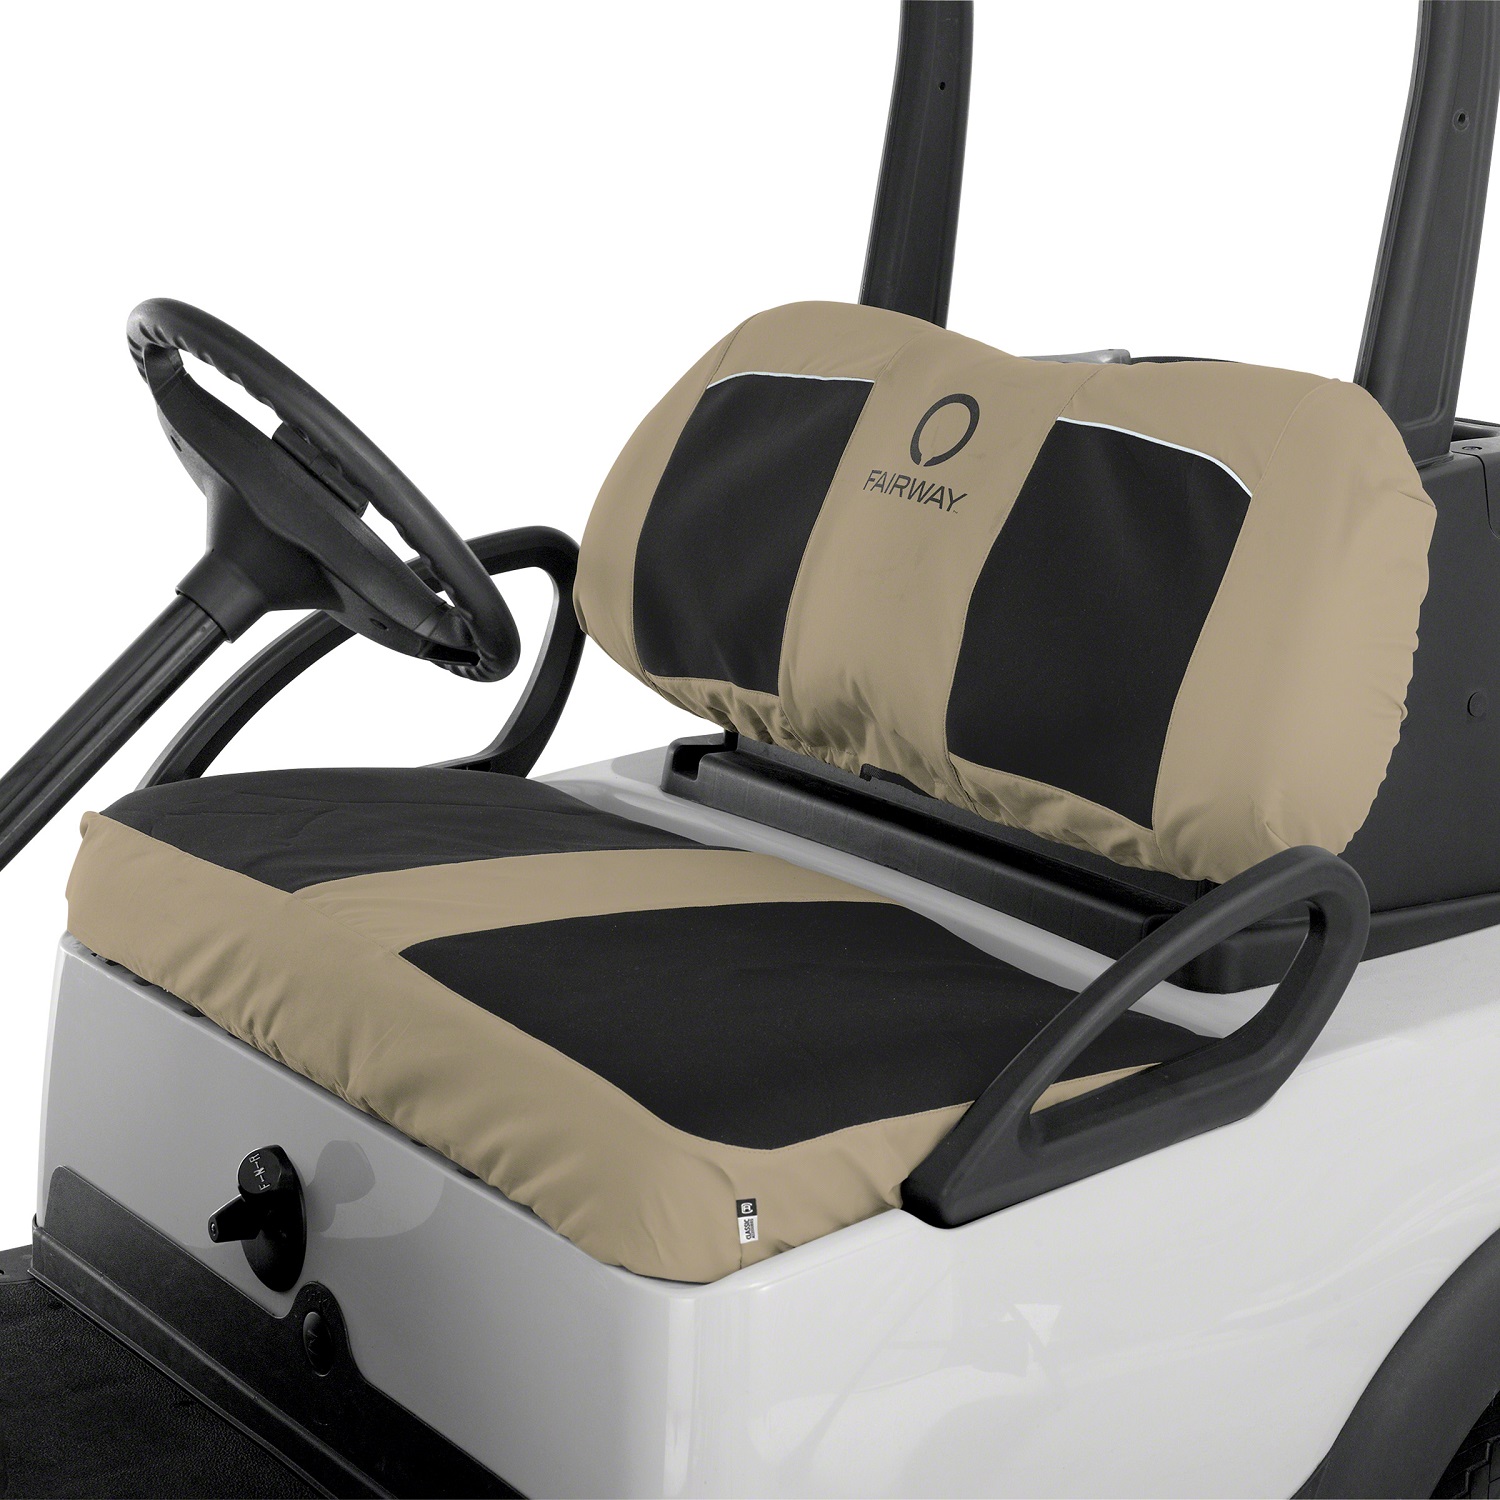 Classic Accessories Fairway Golf Cart Neoprene Panel Bench Seat Cover, Blck/Khaki